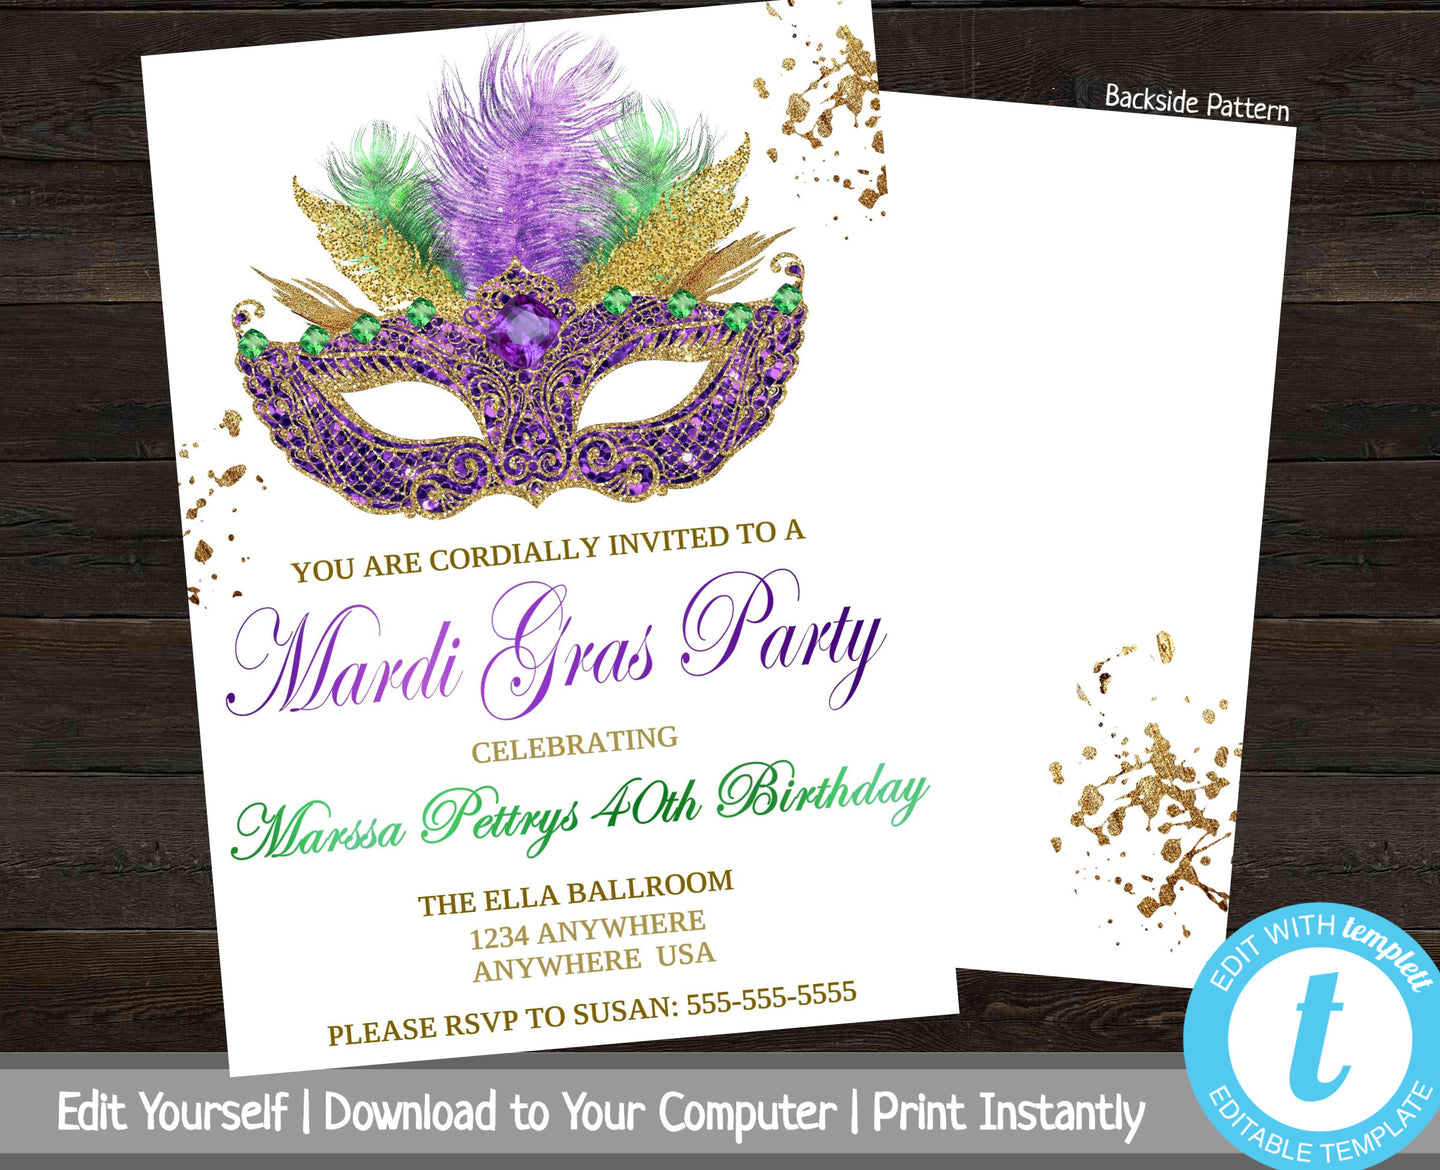 Mardi Gras Party Invite, Birthday Party Invitation, Mardi Gras Bday Party, Masquerade Birthday Party Invite, Milestone Birthday Invitation